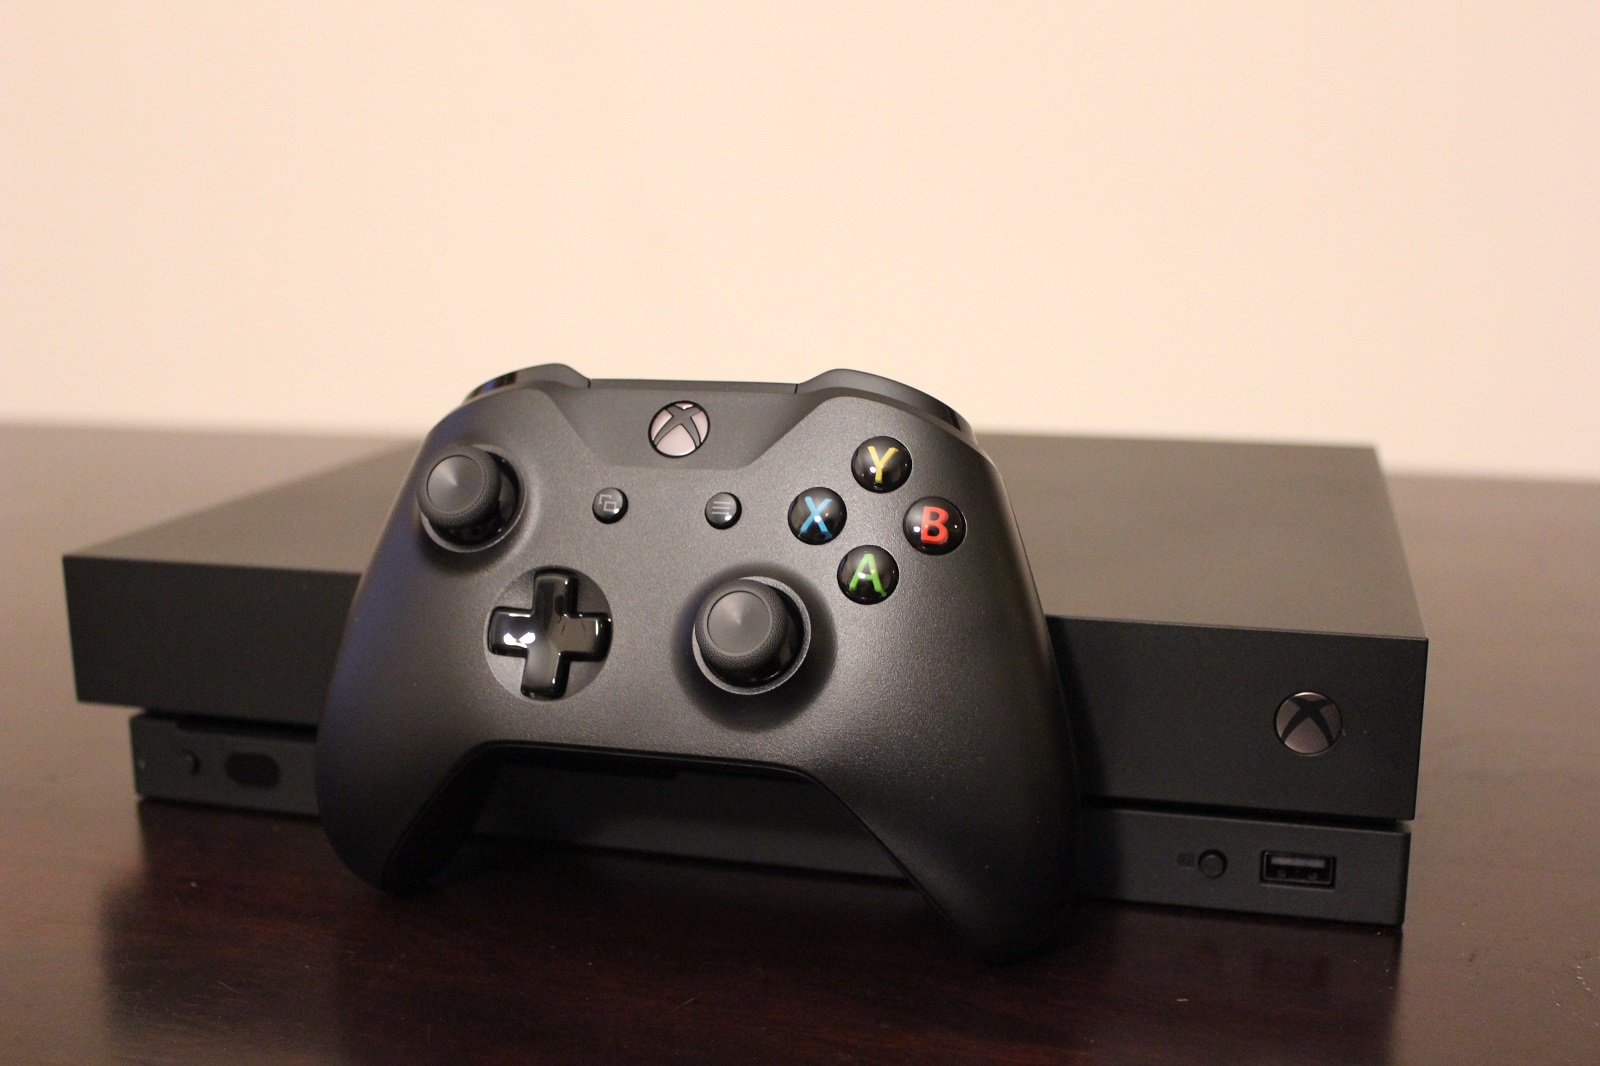 Xbox One S Gears of War 4 - Stop Games - A loja de games mais